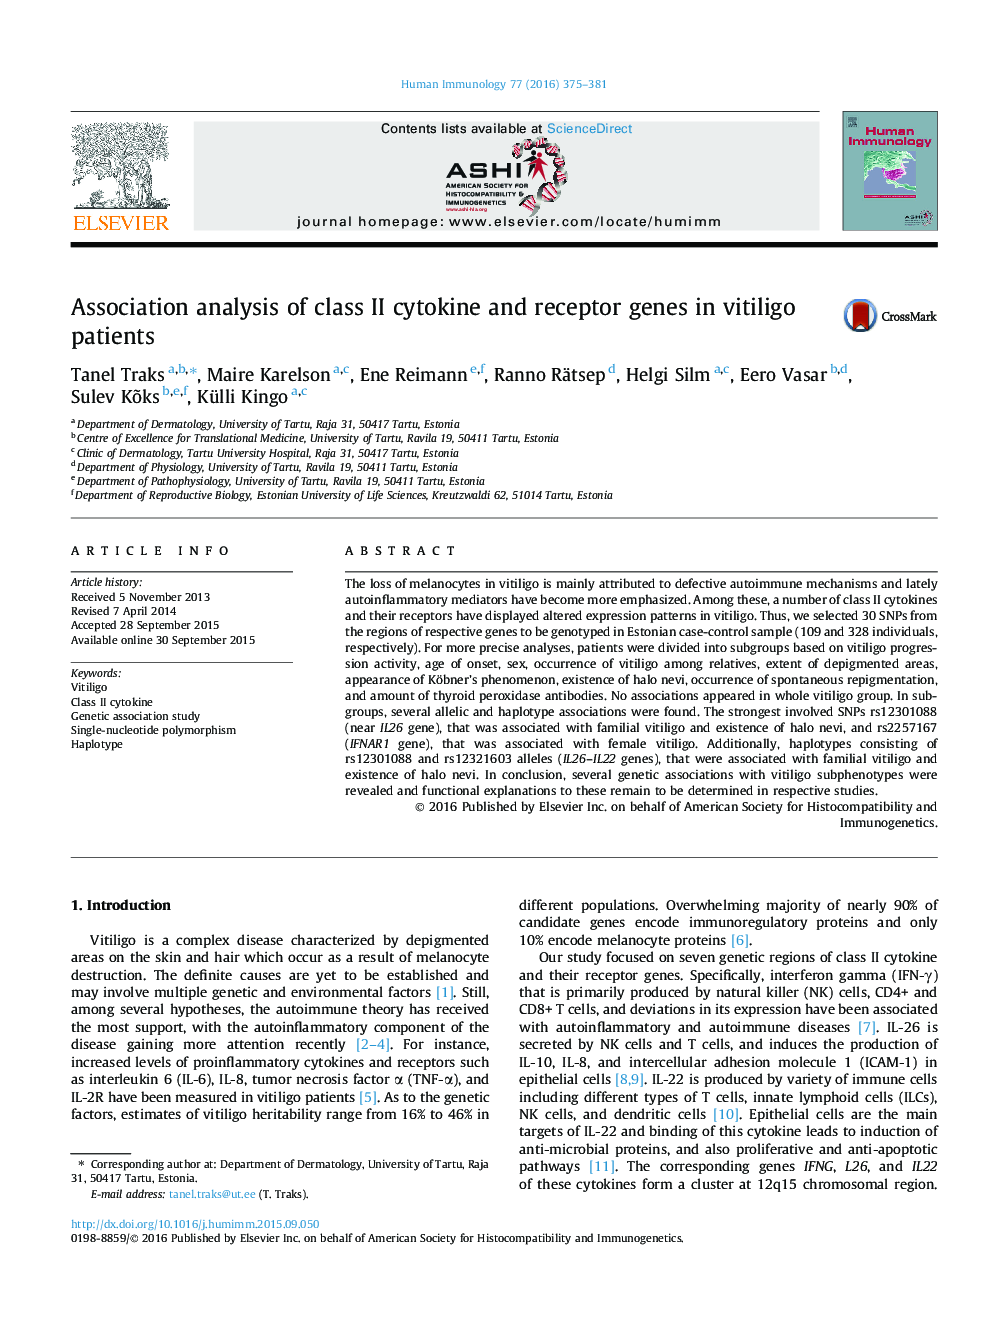 Association analysis of class II cytokine and receptor genes in vitiligo patients